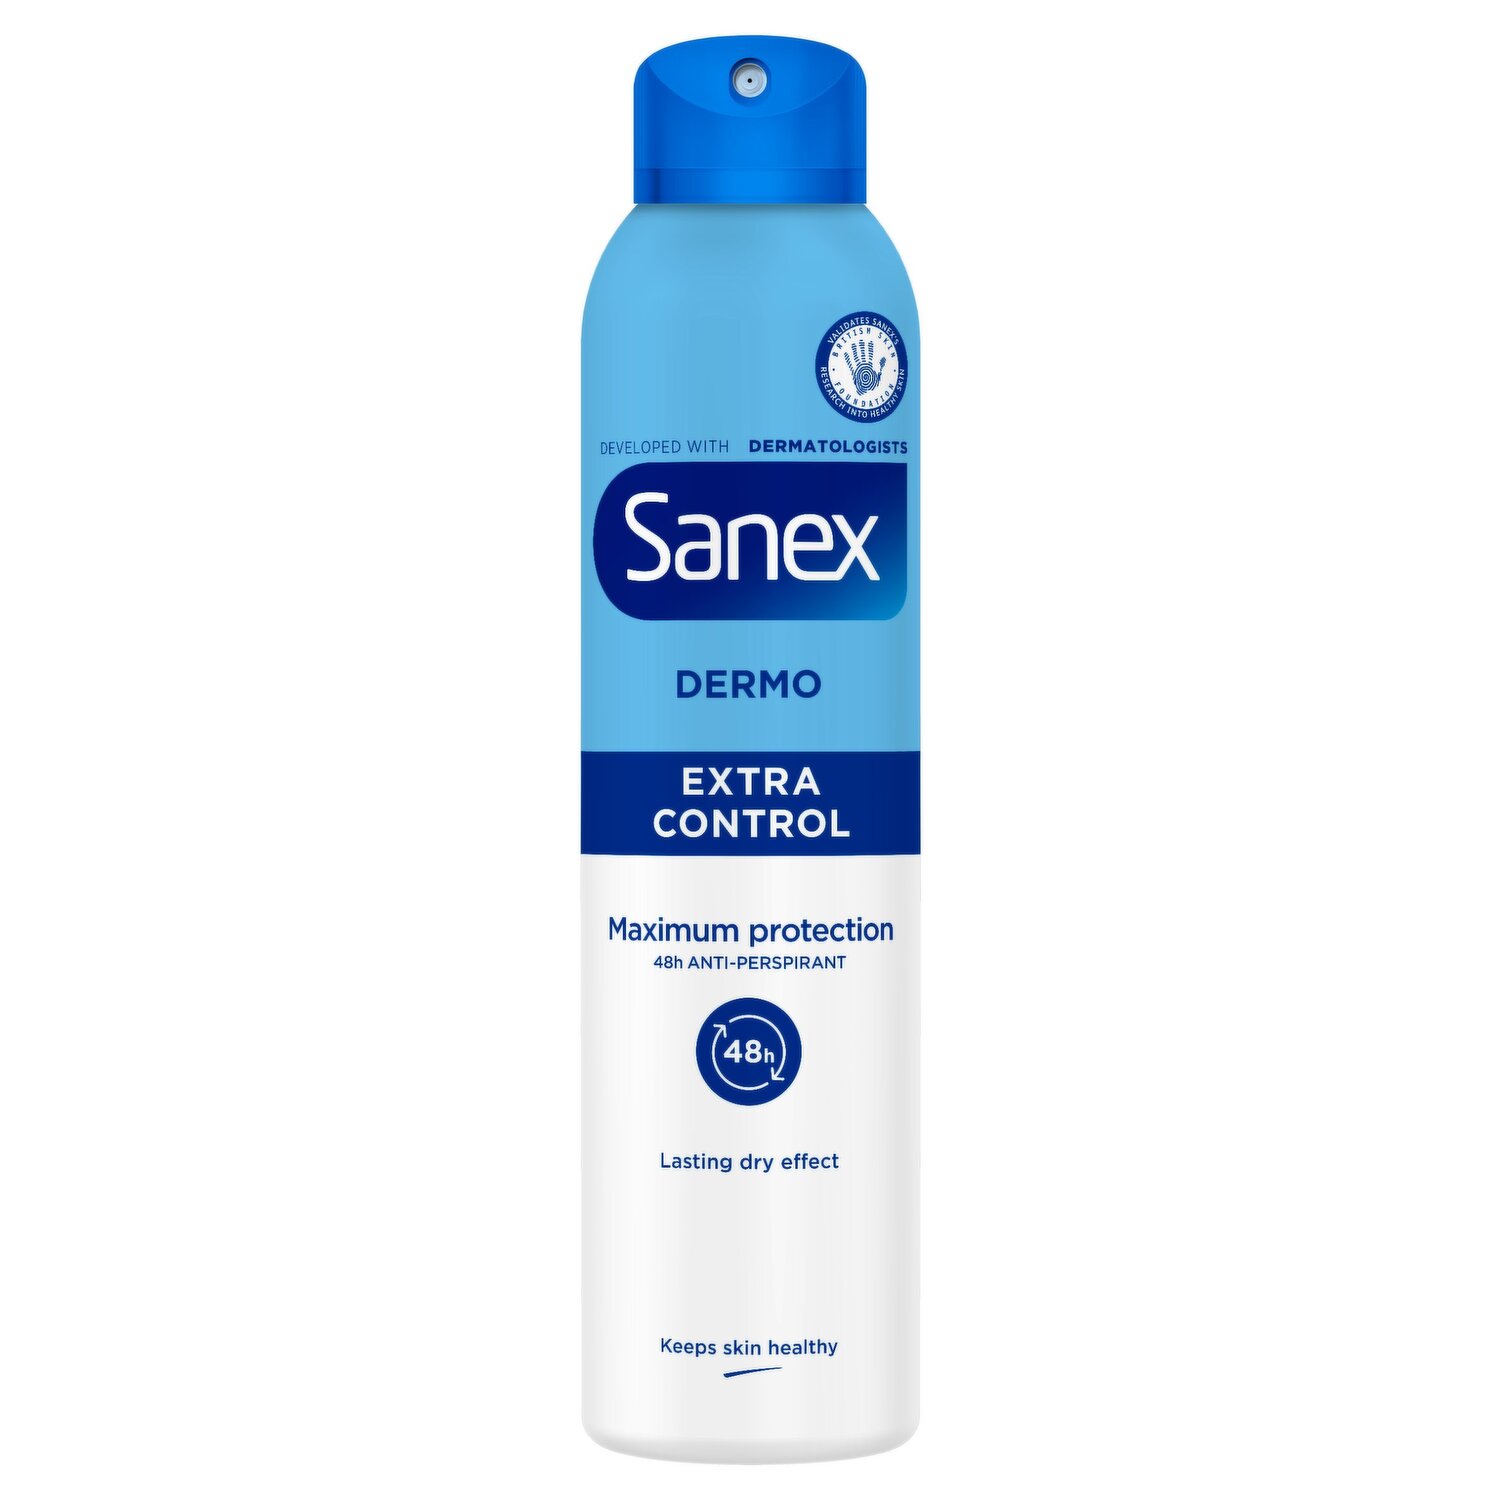 Sanex Dermo Extra Control Antiperspirant Deodorant